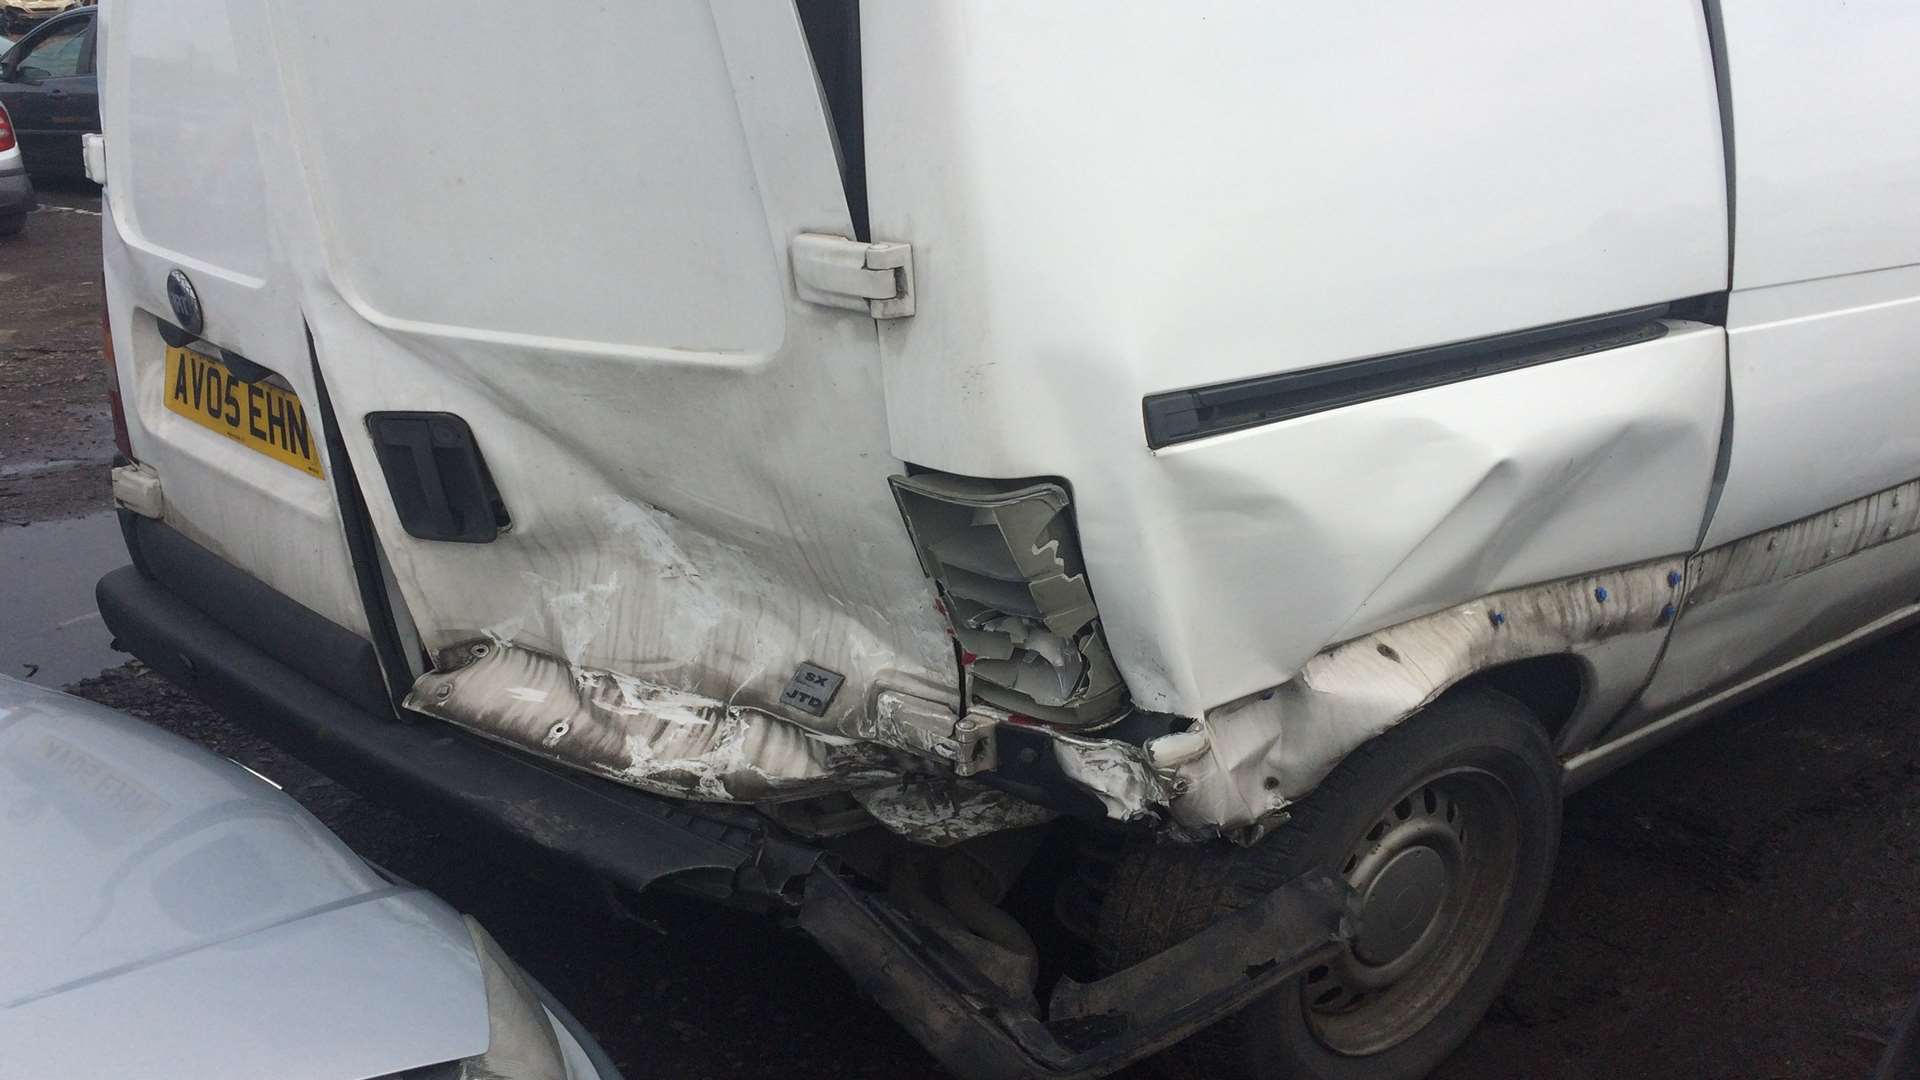 The damage to James Morrison's van